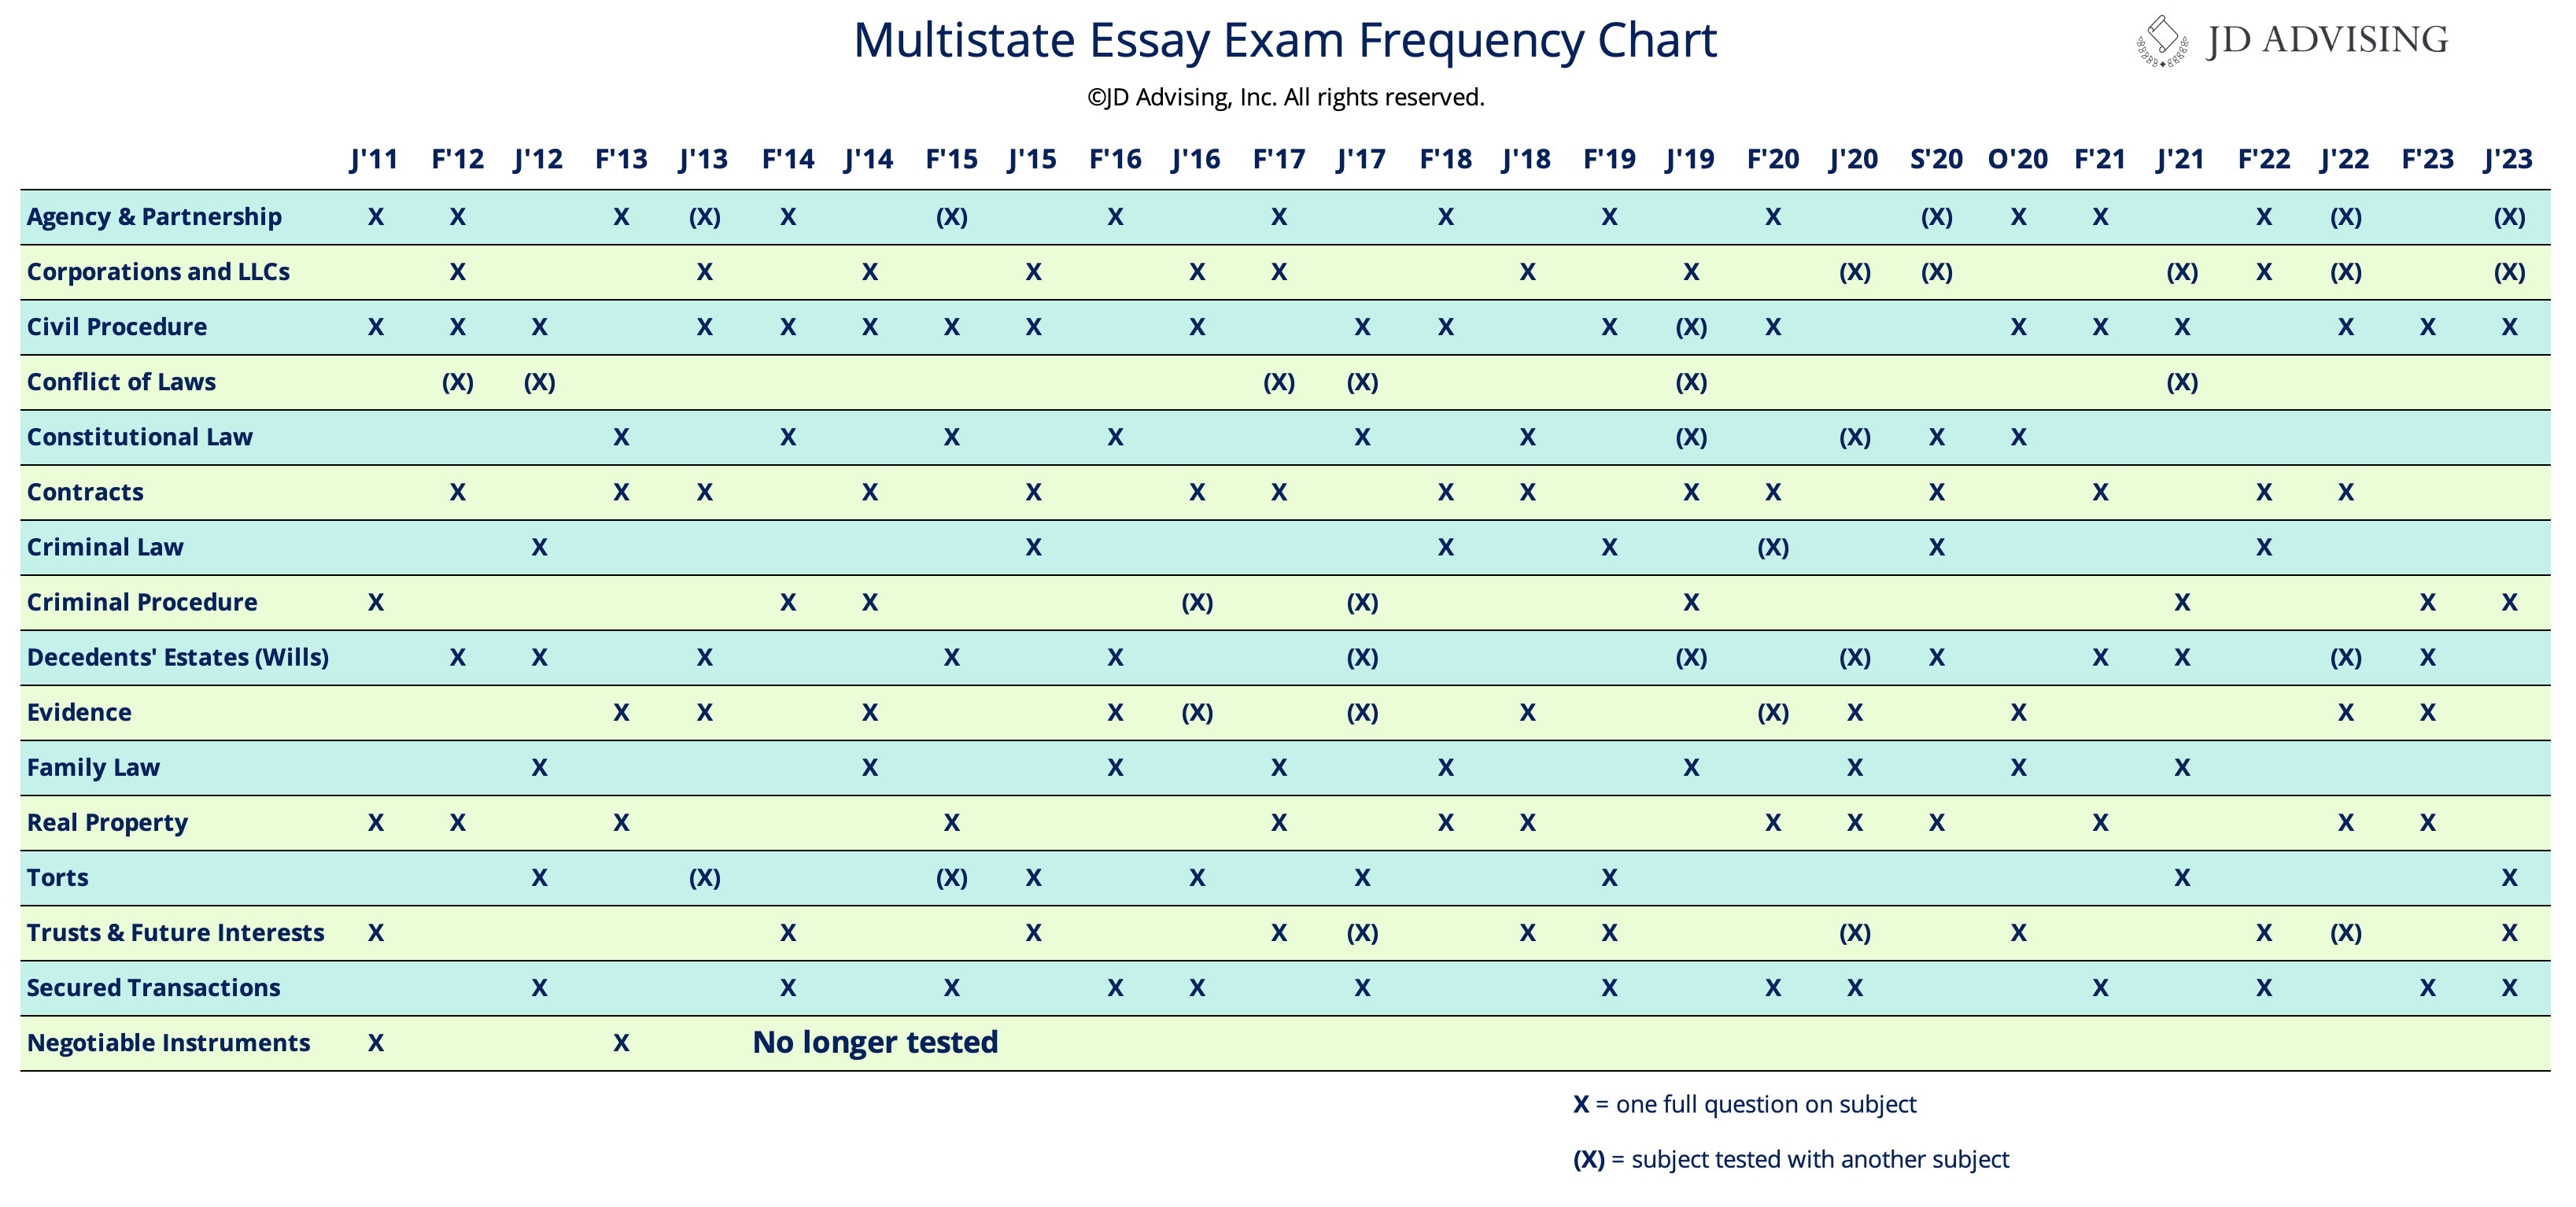 michigan bar exam essay frequency chart